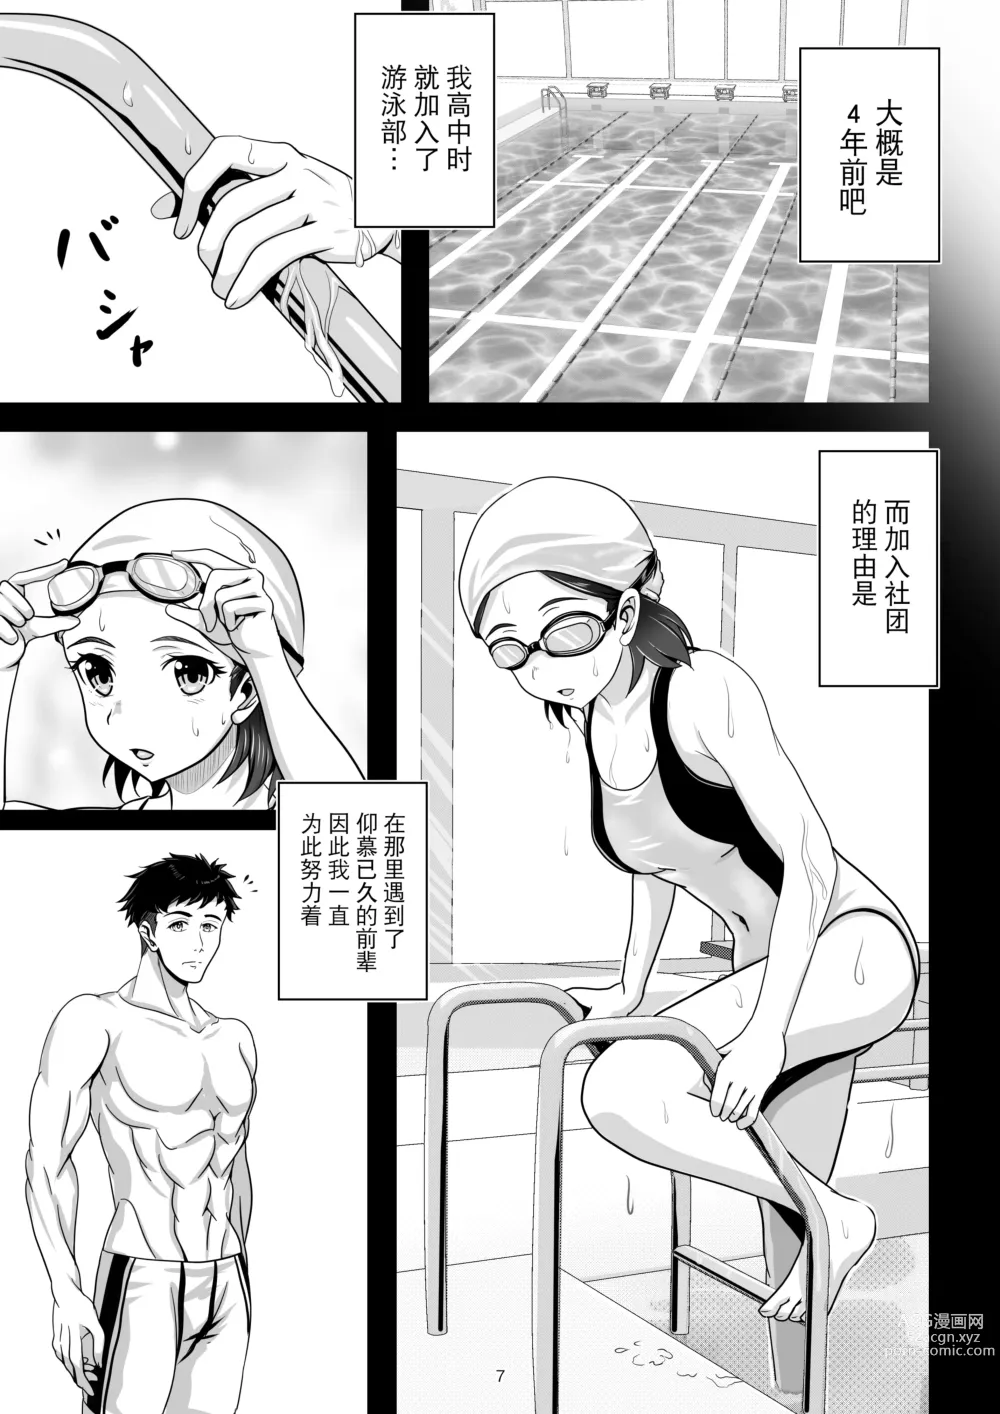 Page 7 of doujinshi Bunny x Baito Party